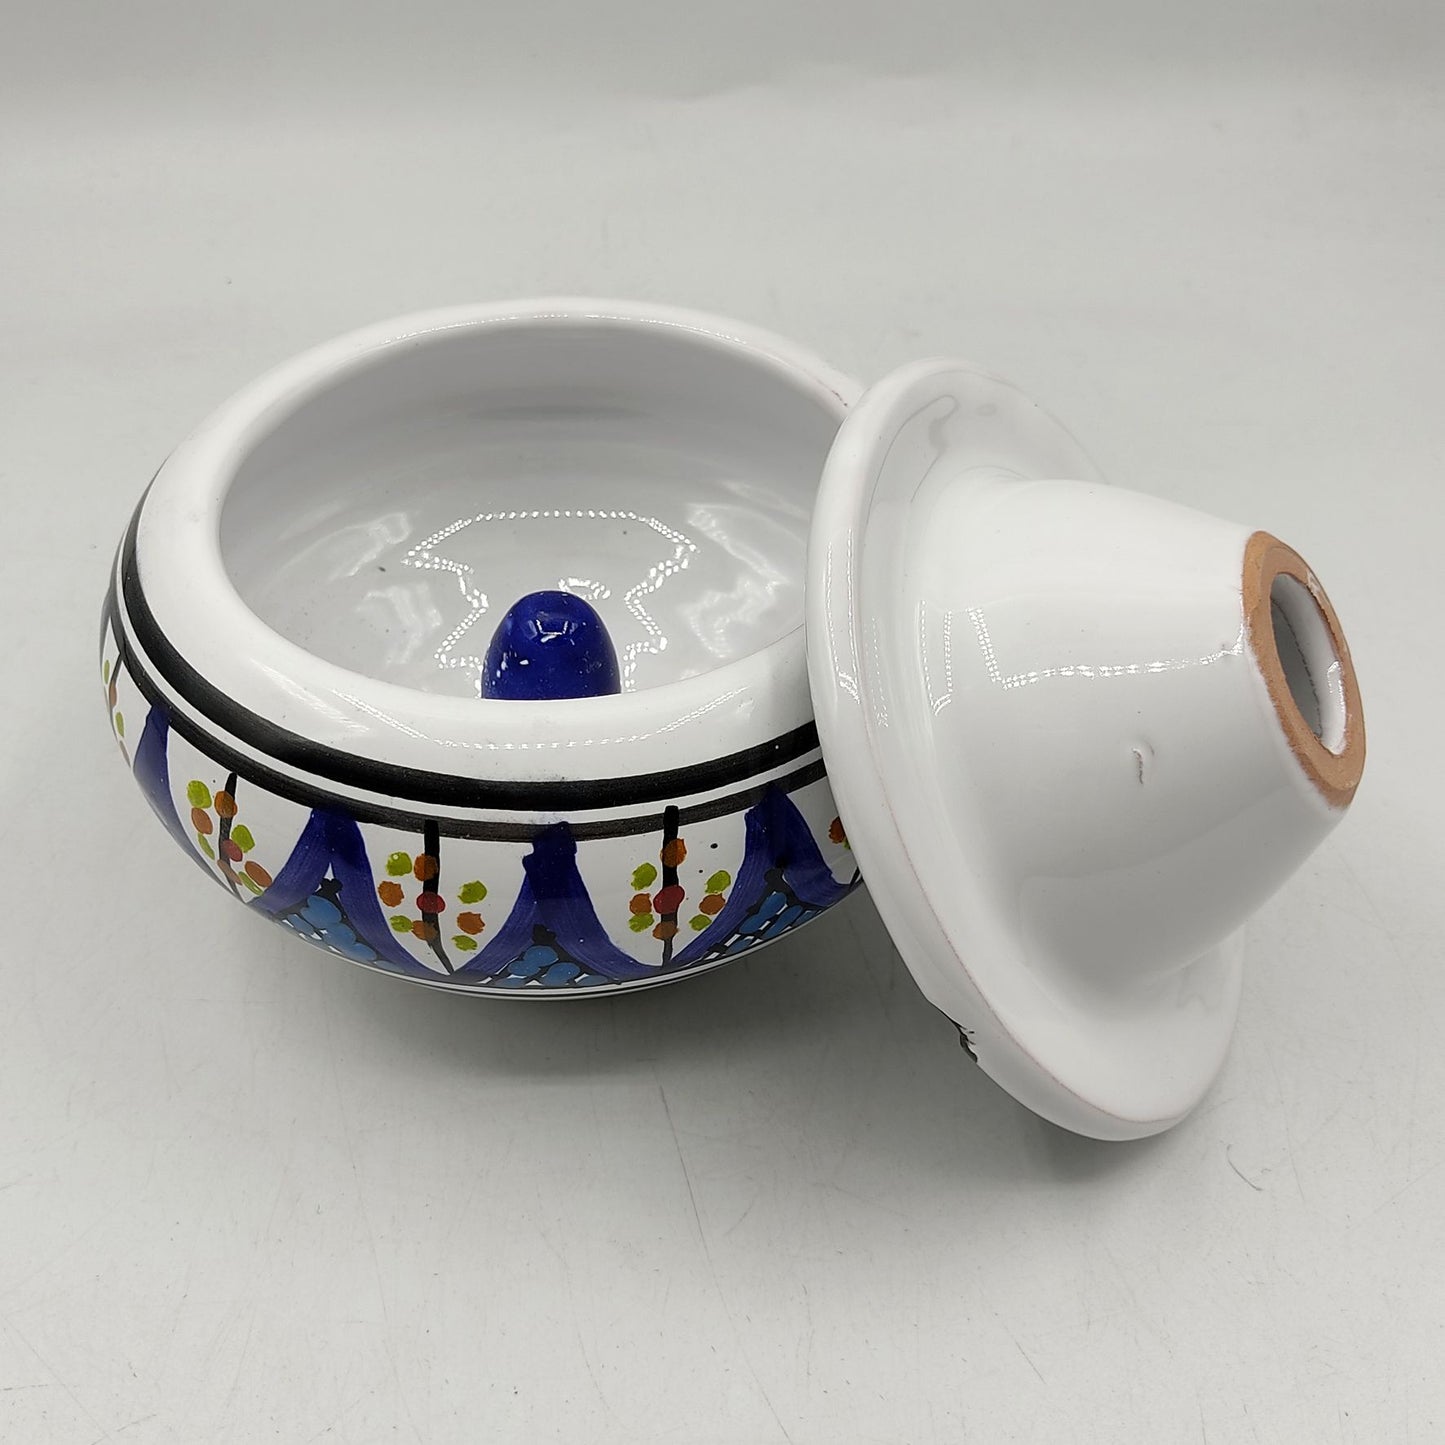 Etnico Arredo Posacenere Ceramica Antiodore Tunisina Marocchina 2007211100